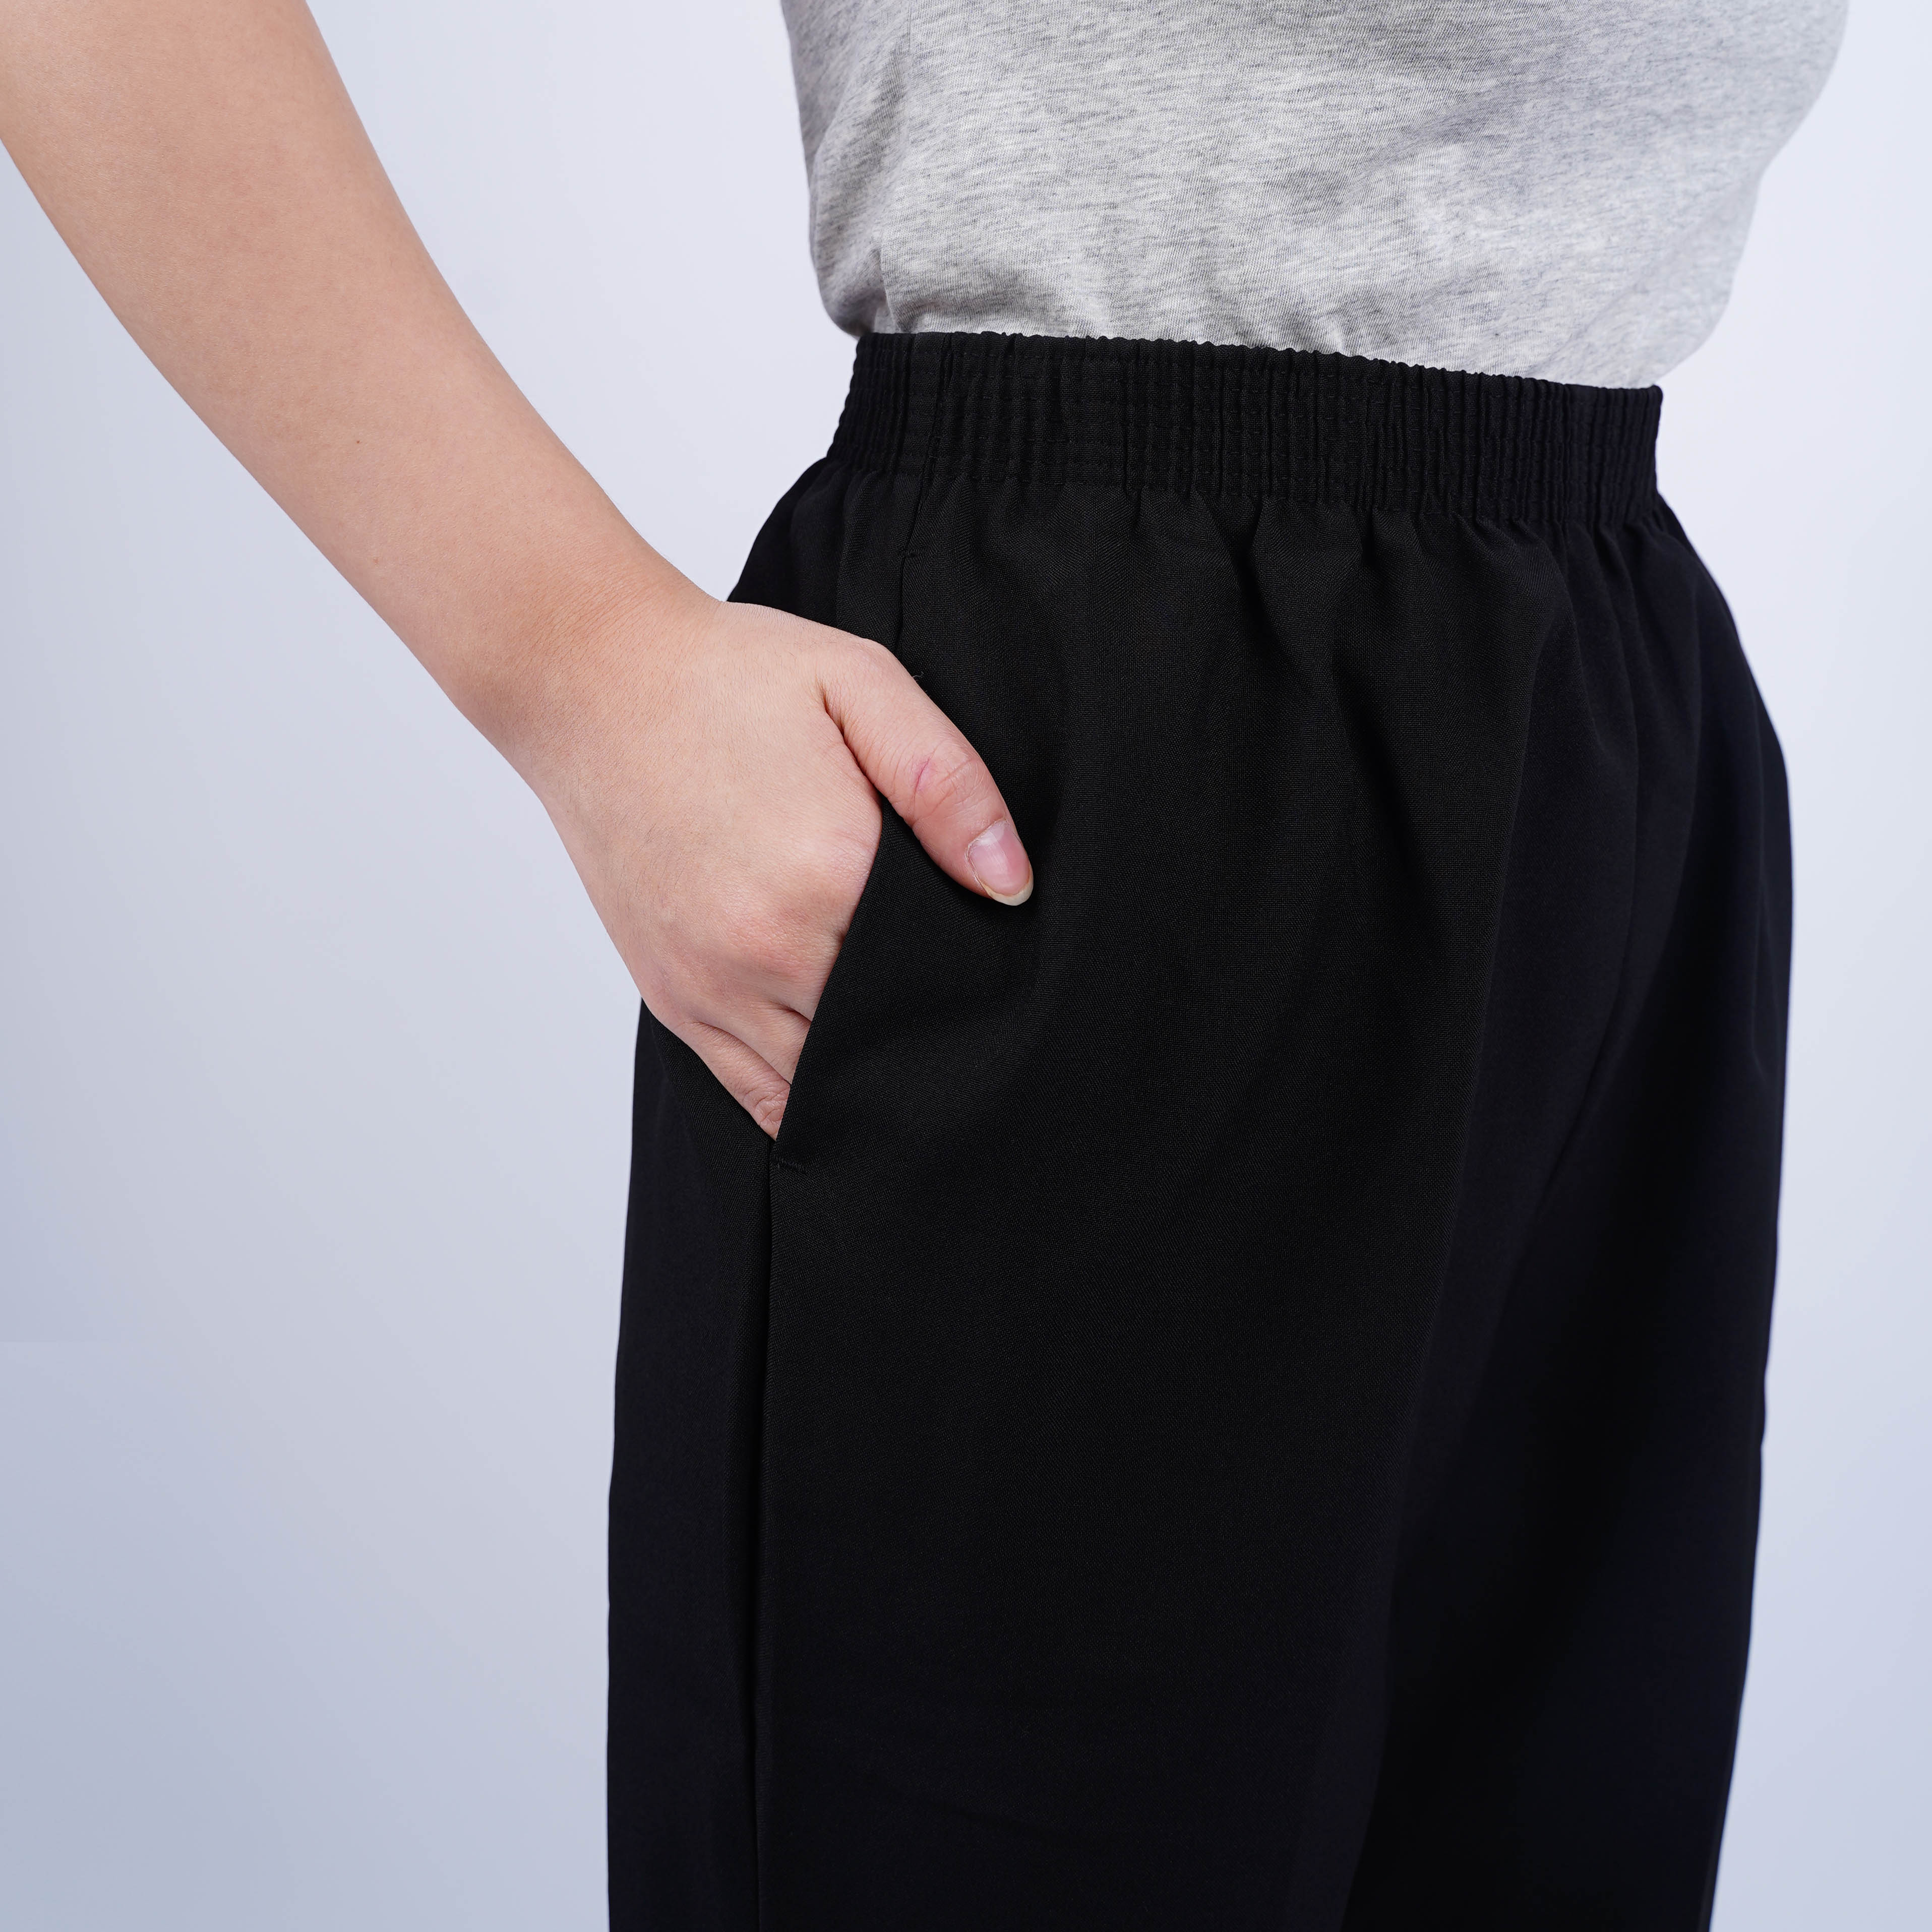 Celana Panjang Wanita Comfort Fit Pants [CG-TAN 02]